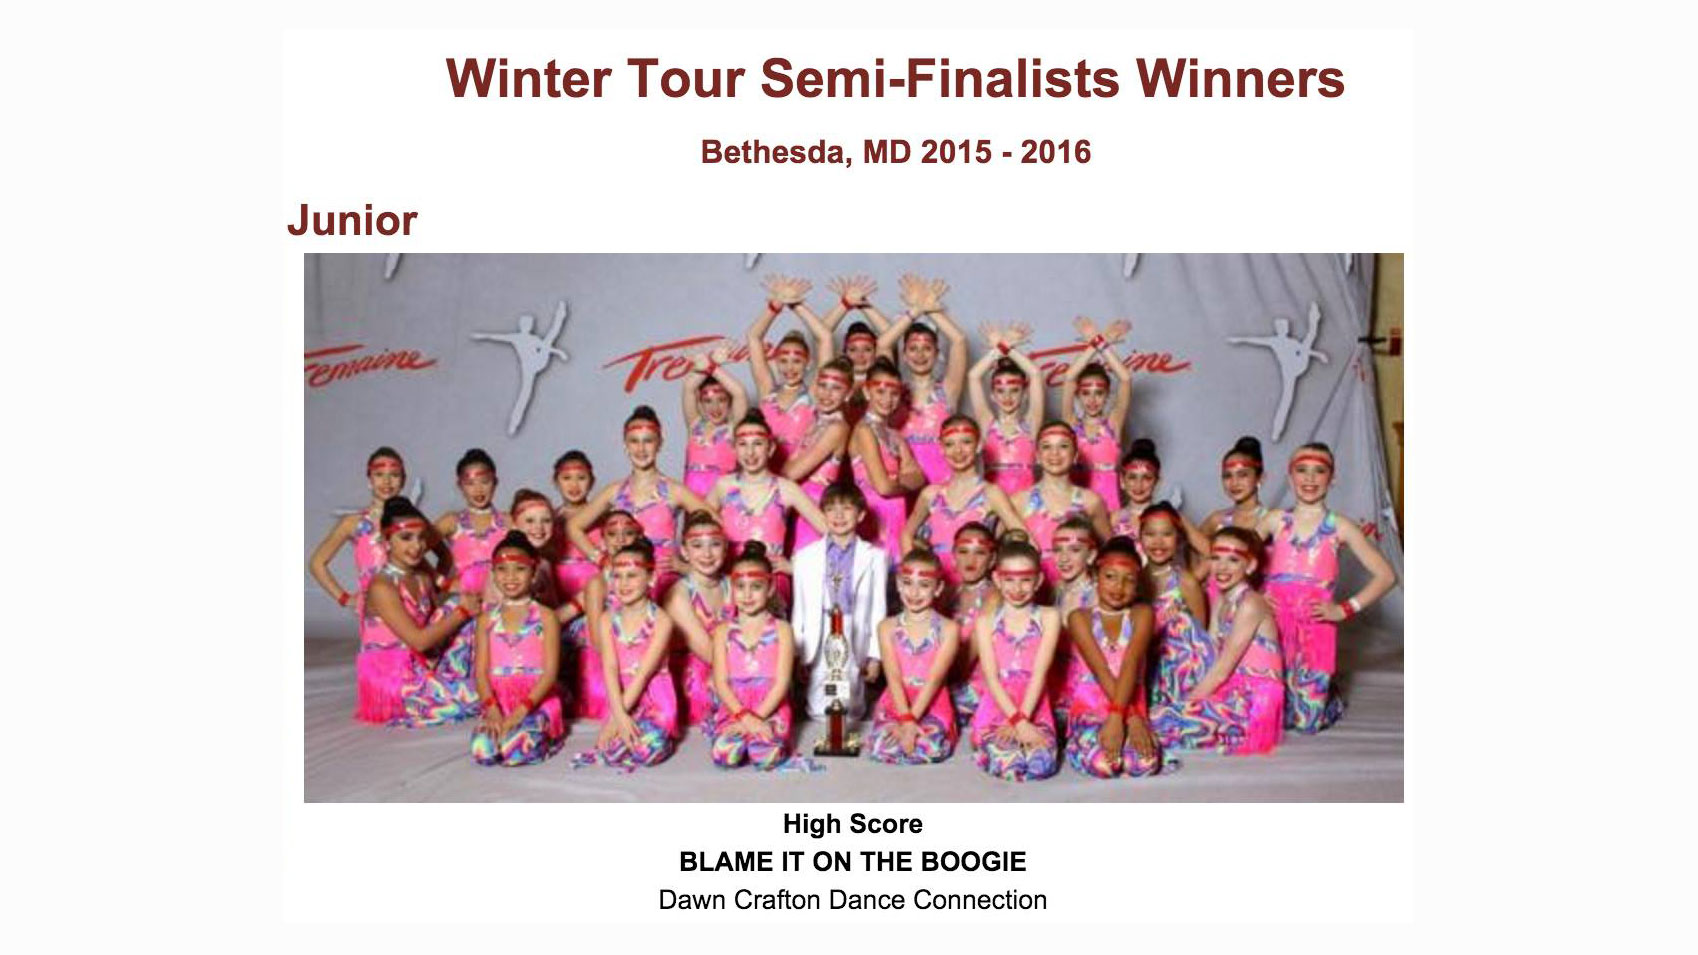 Winter Tour Semi-Finalists Winner Senior High Score